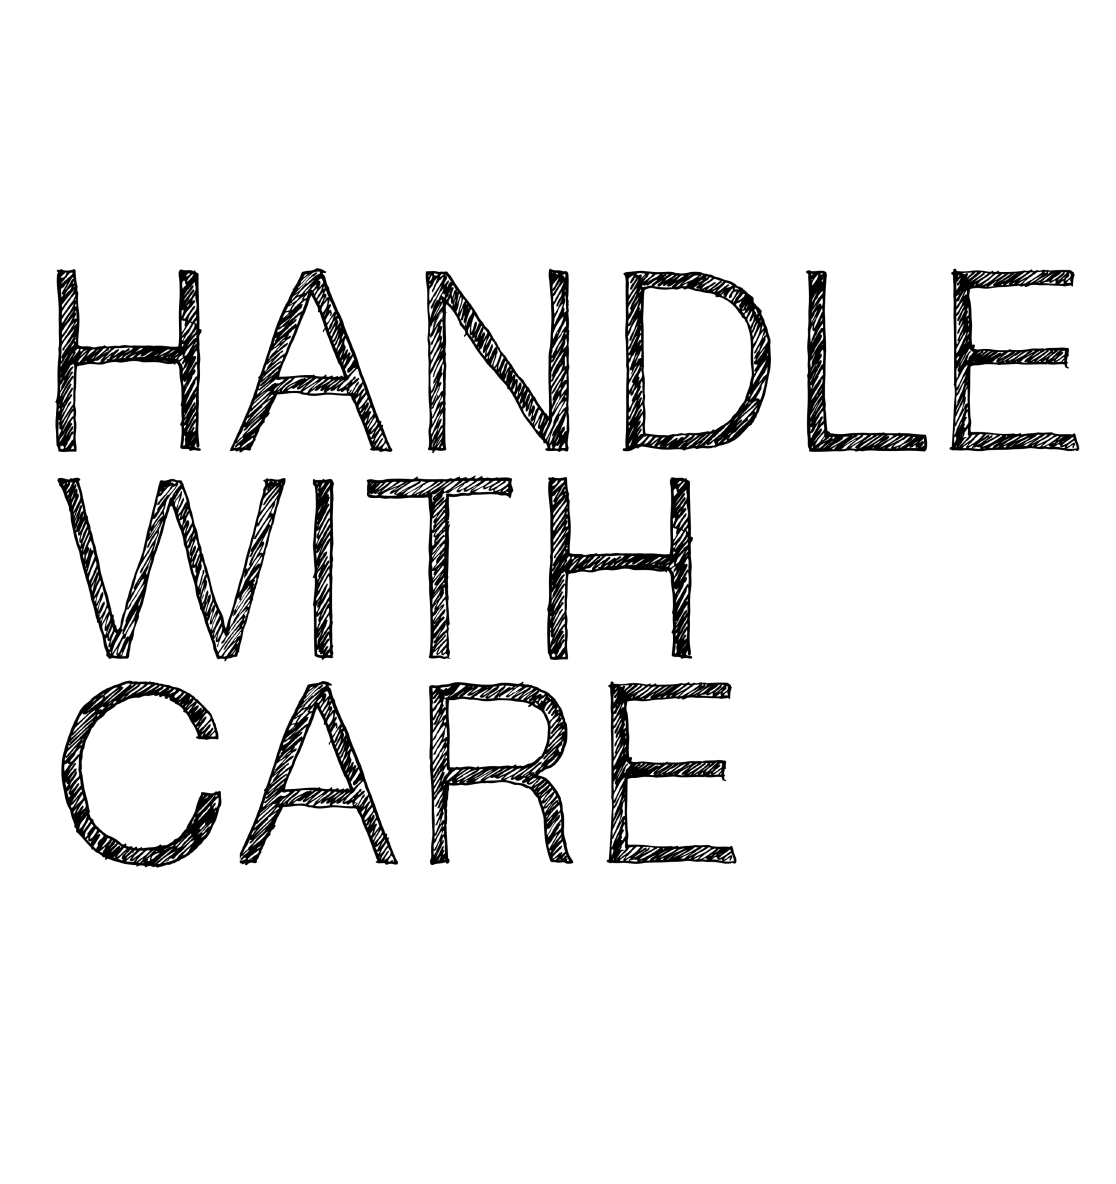 handle with care, Typo & Texte, handmade designs, faibleshop.com